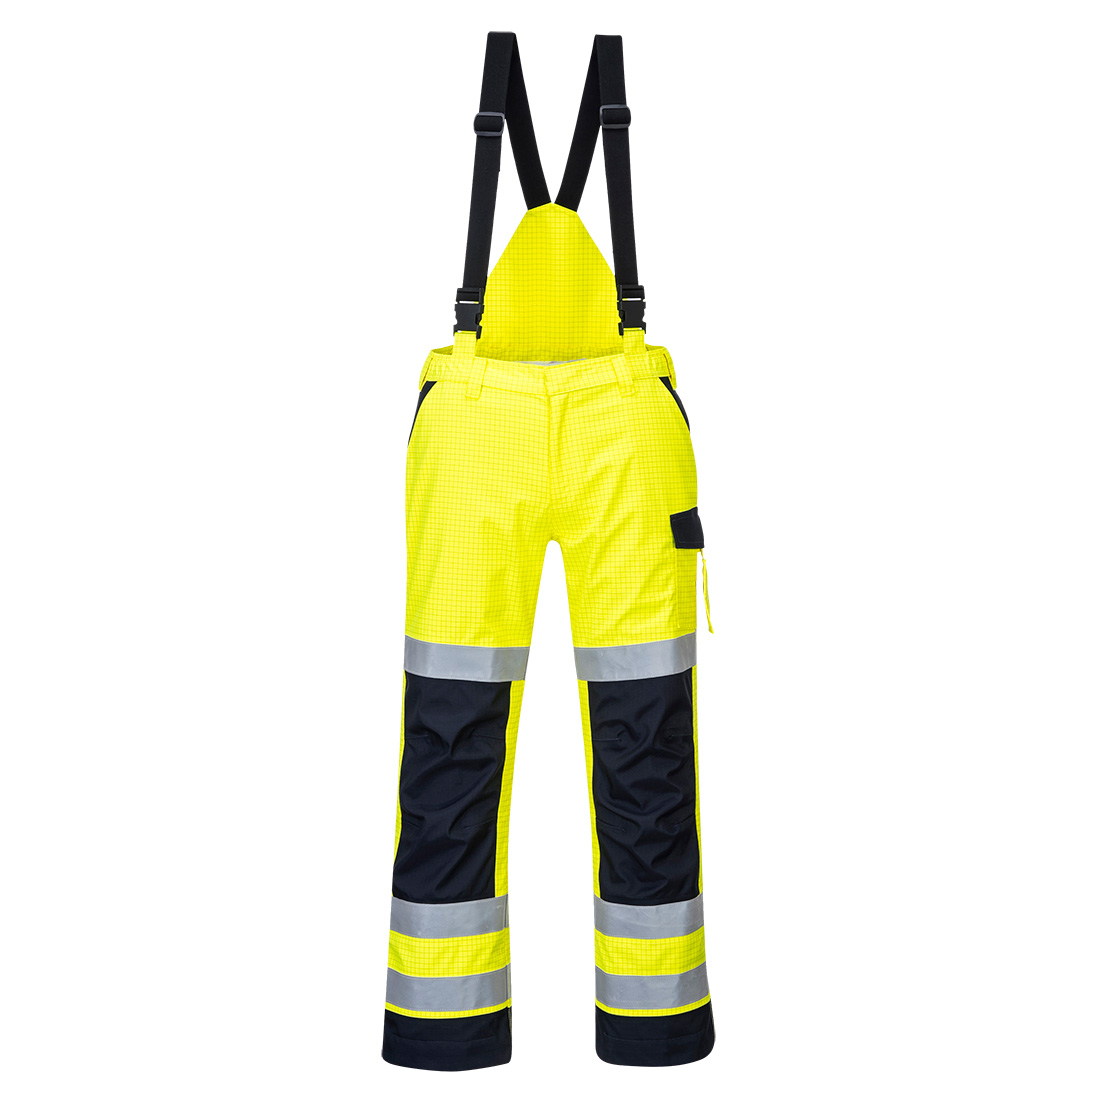 Modaflame Rain Multi Norm Arc Trouser - Yellow/Navy